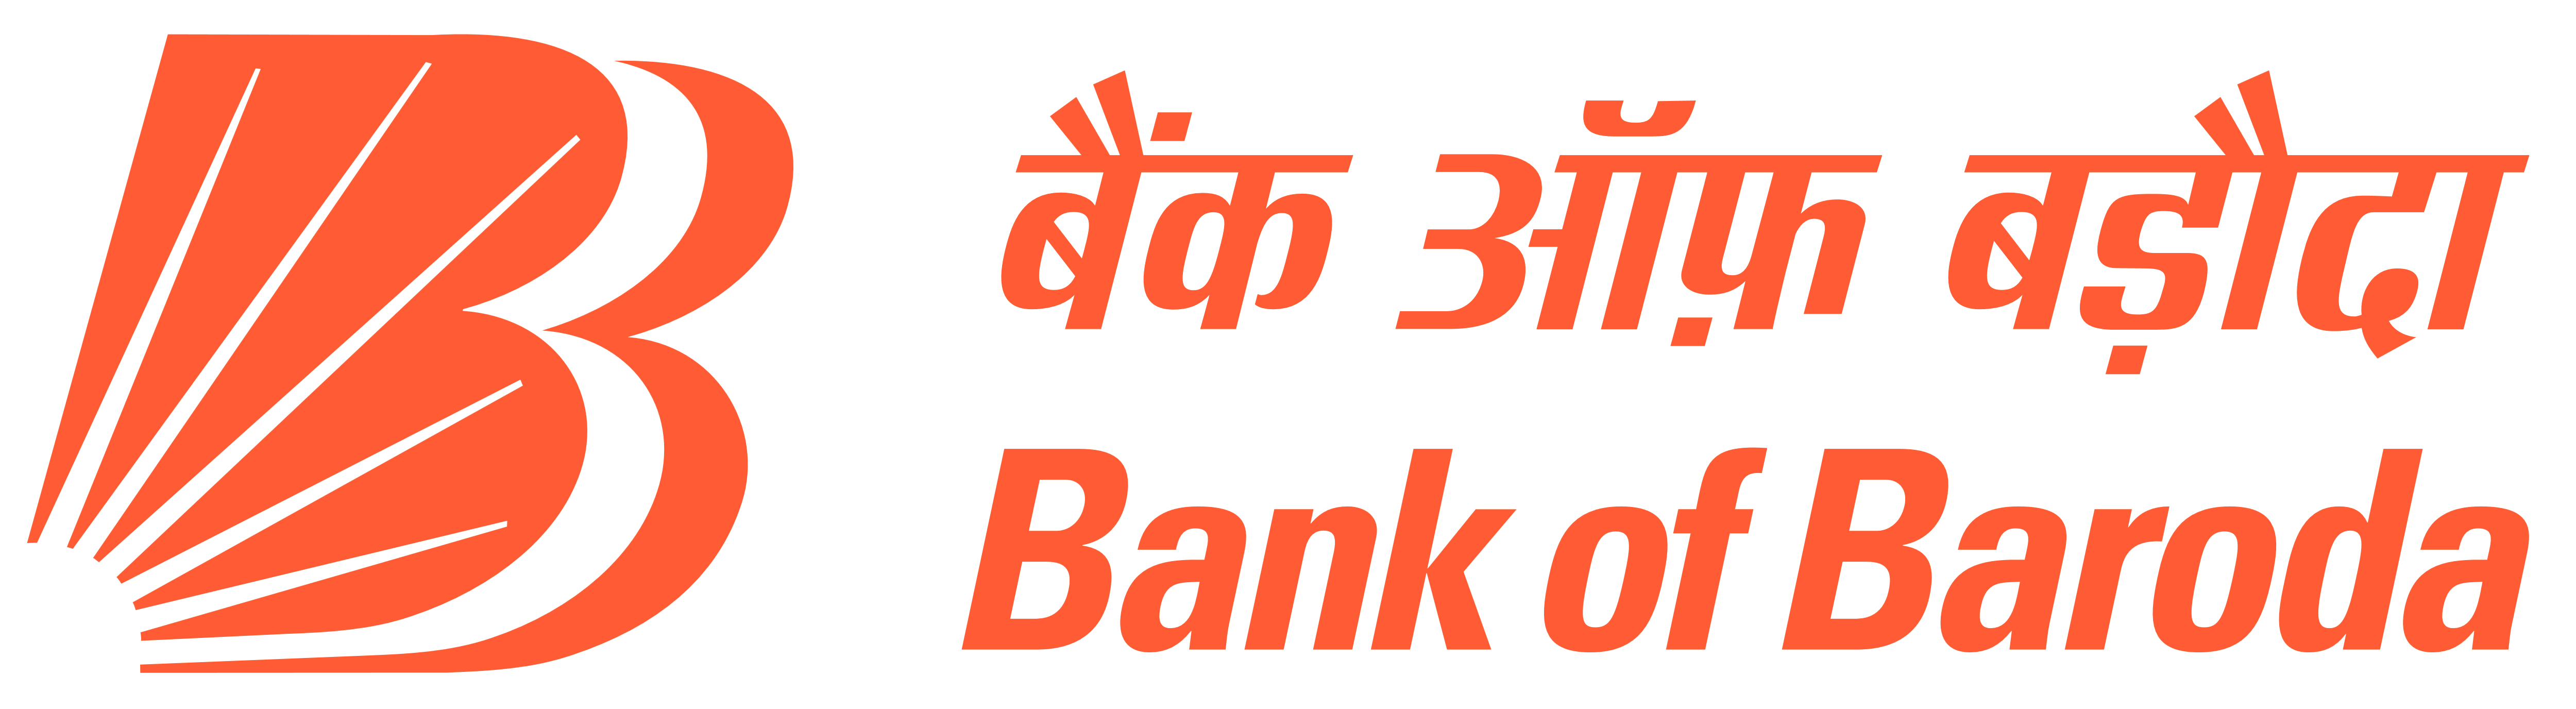 Bob Logo - Bank of Baroda